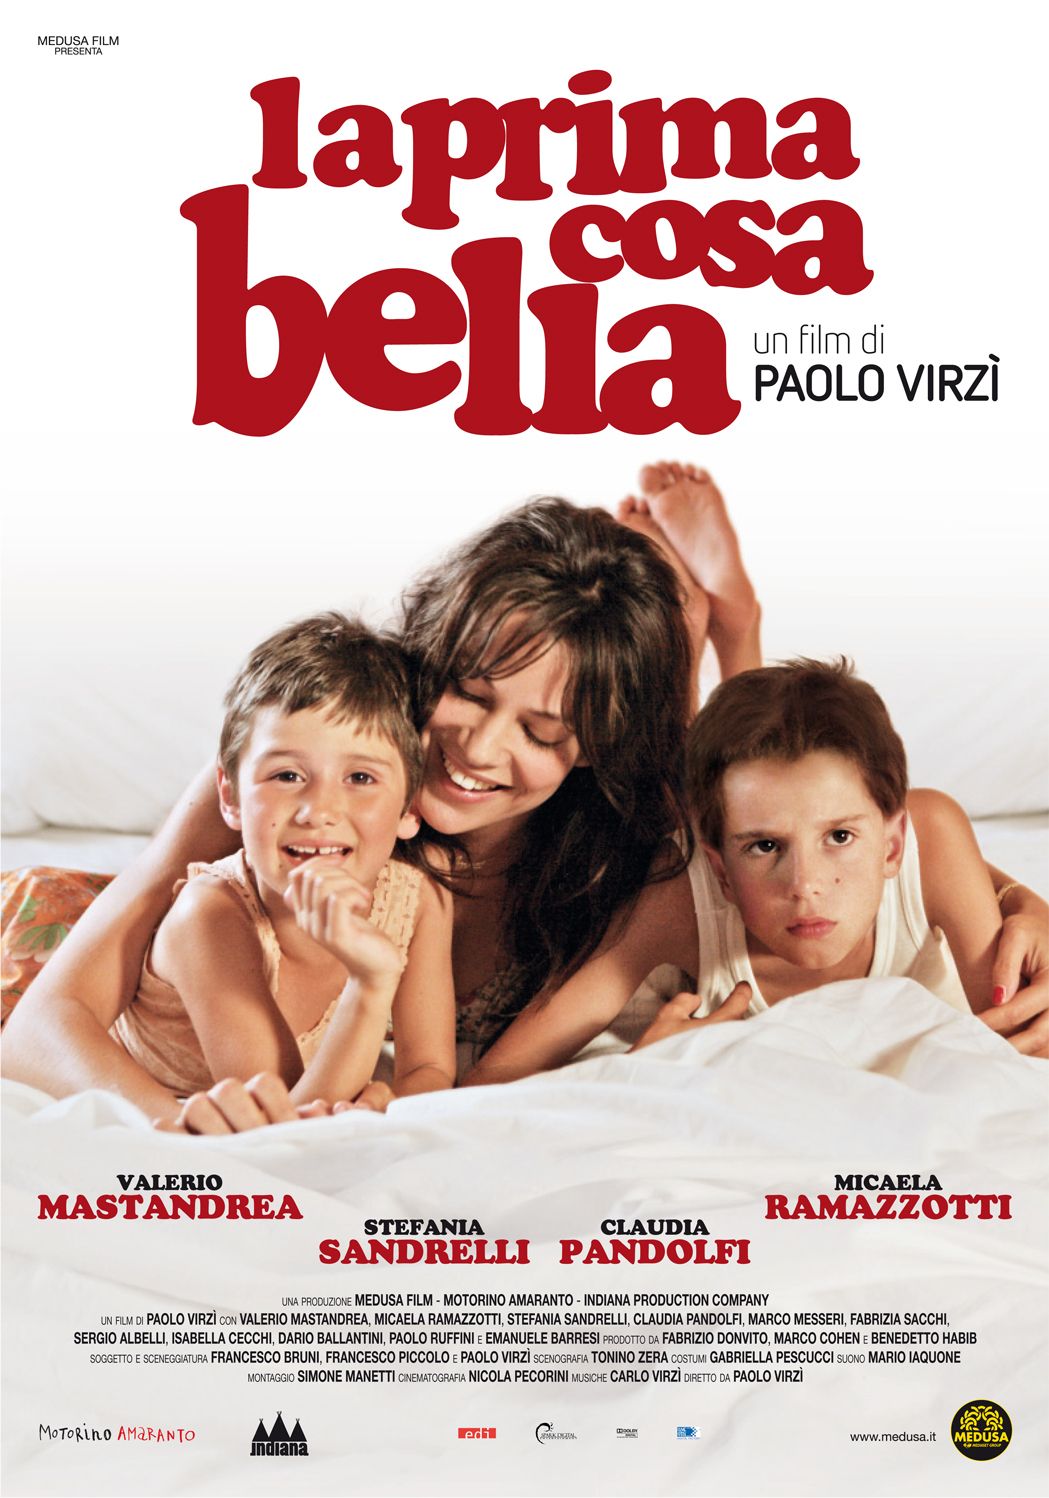 Extra Large Movie Poster Image for La prima cosa bella (#1 of 4)